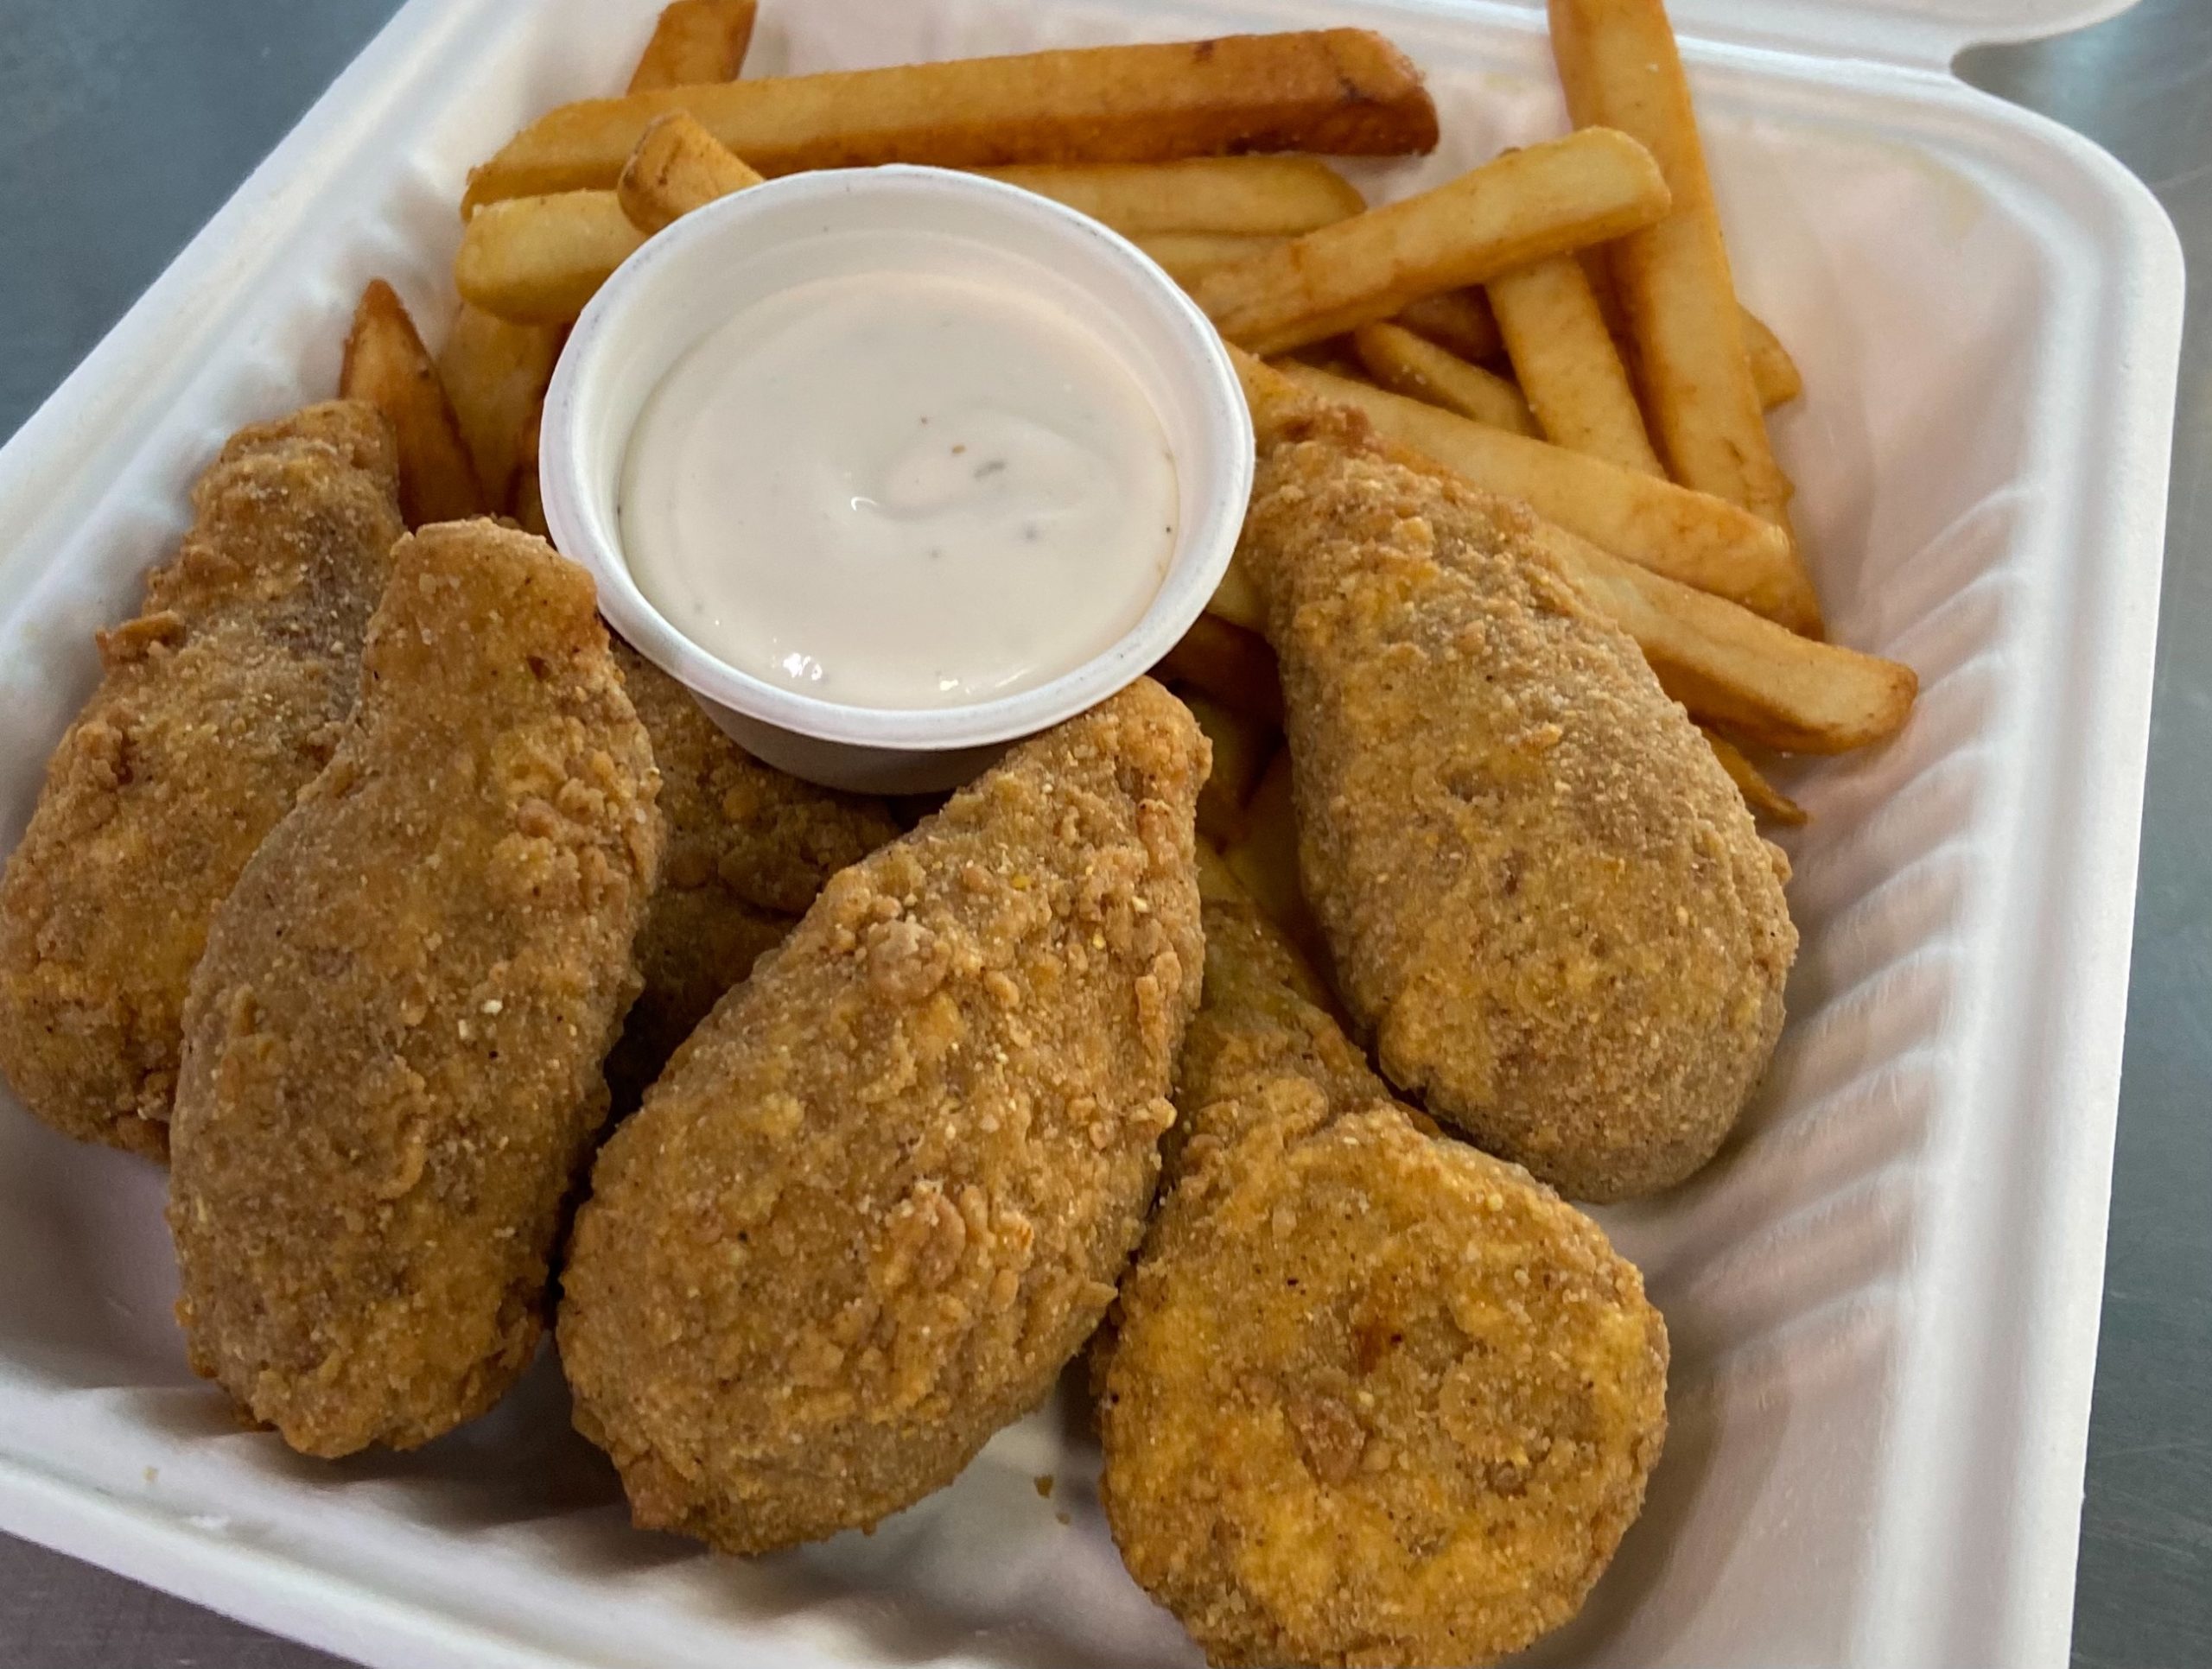 Compton Vegan chicken and fries